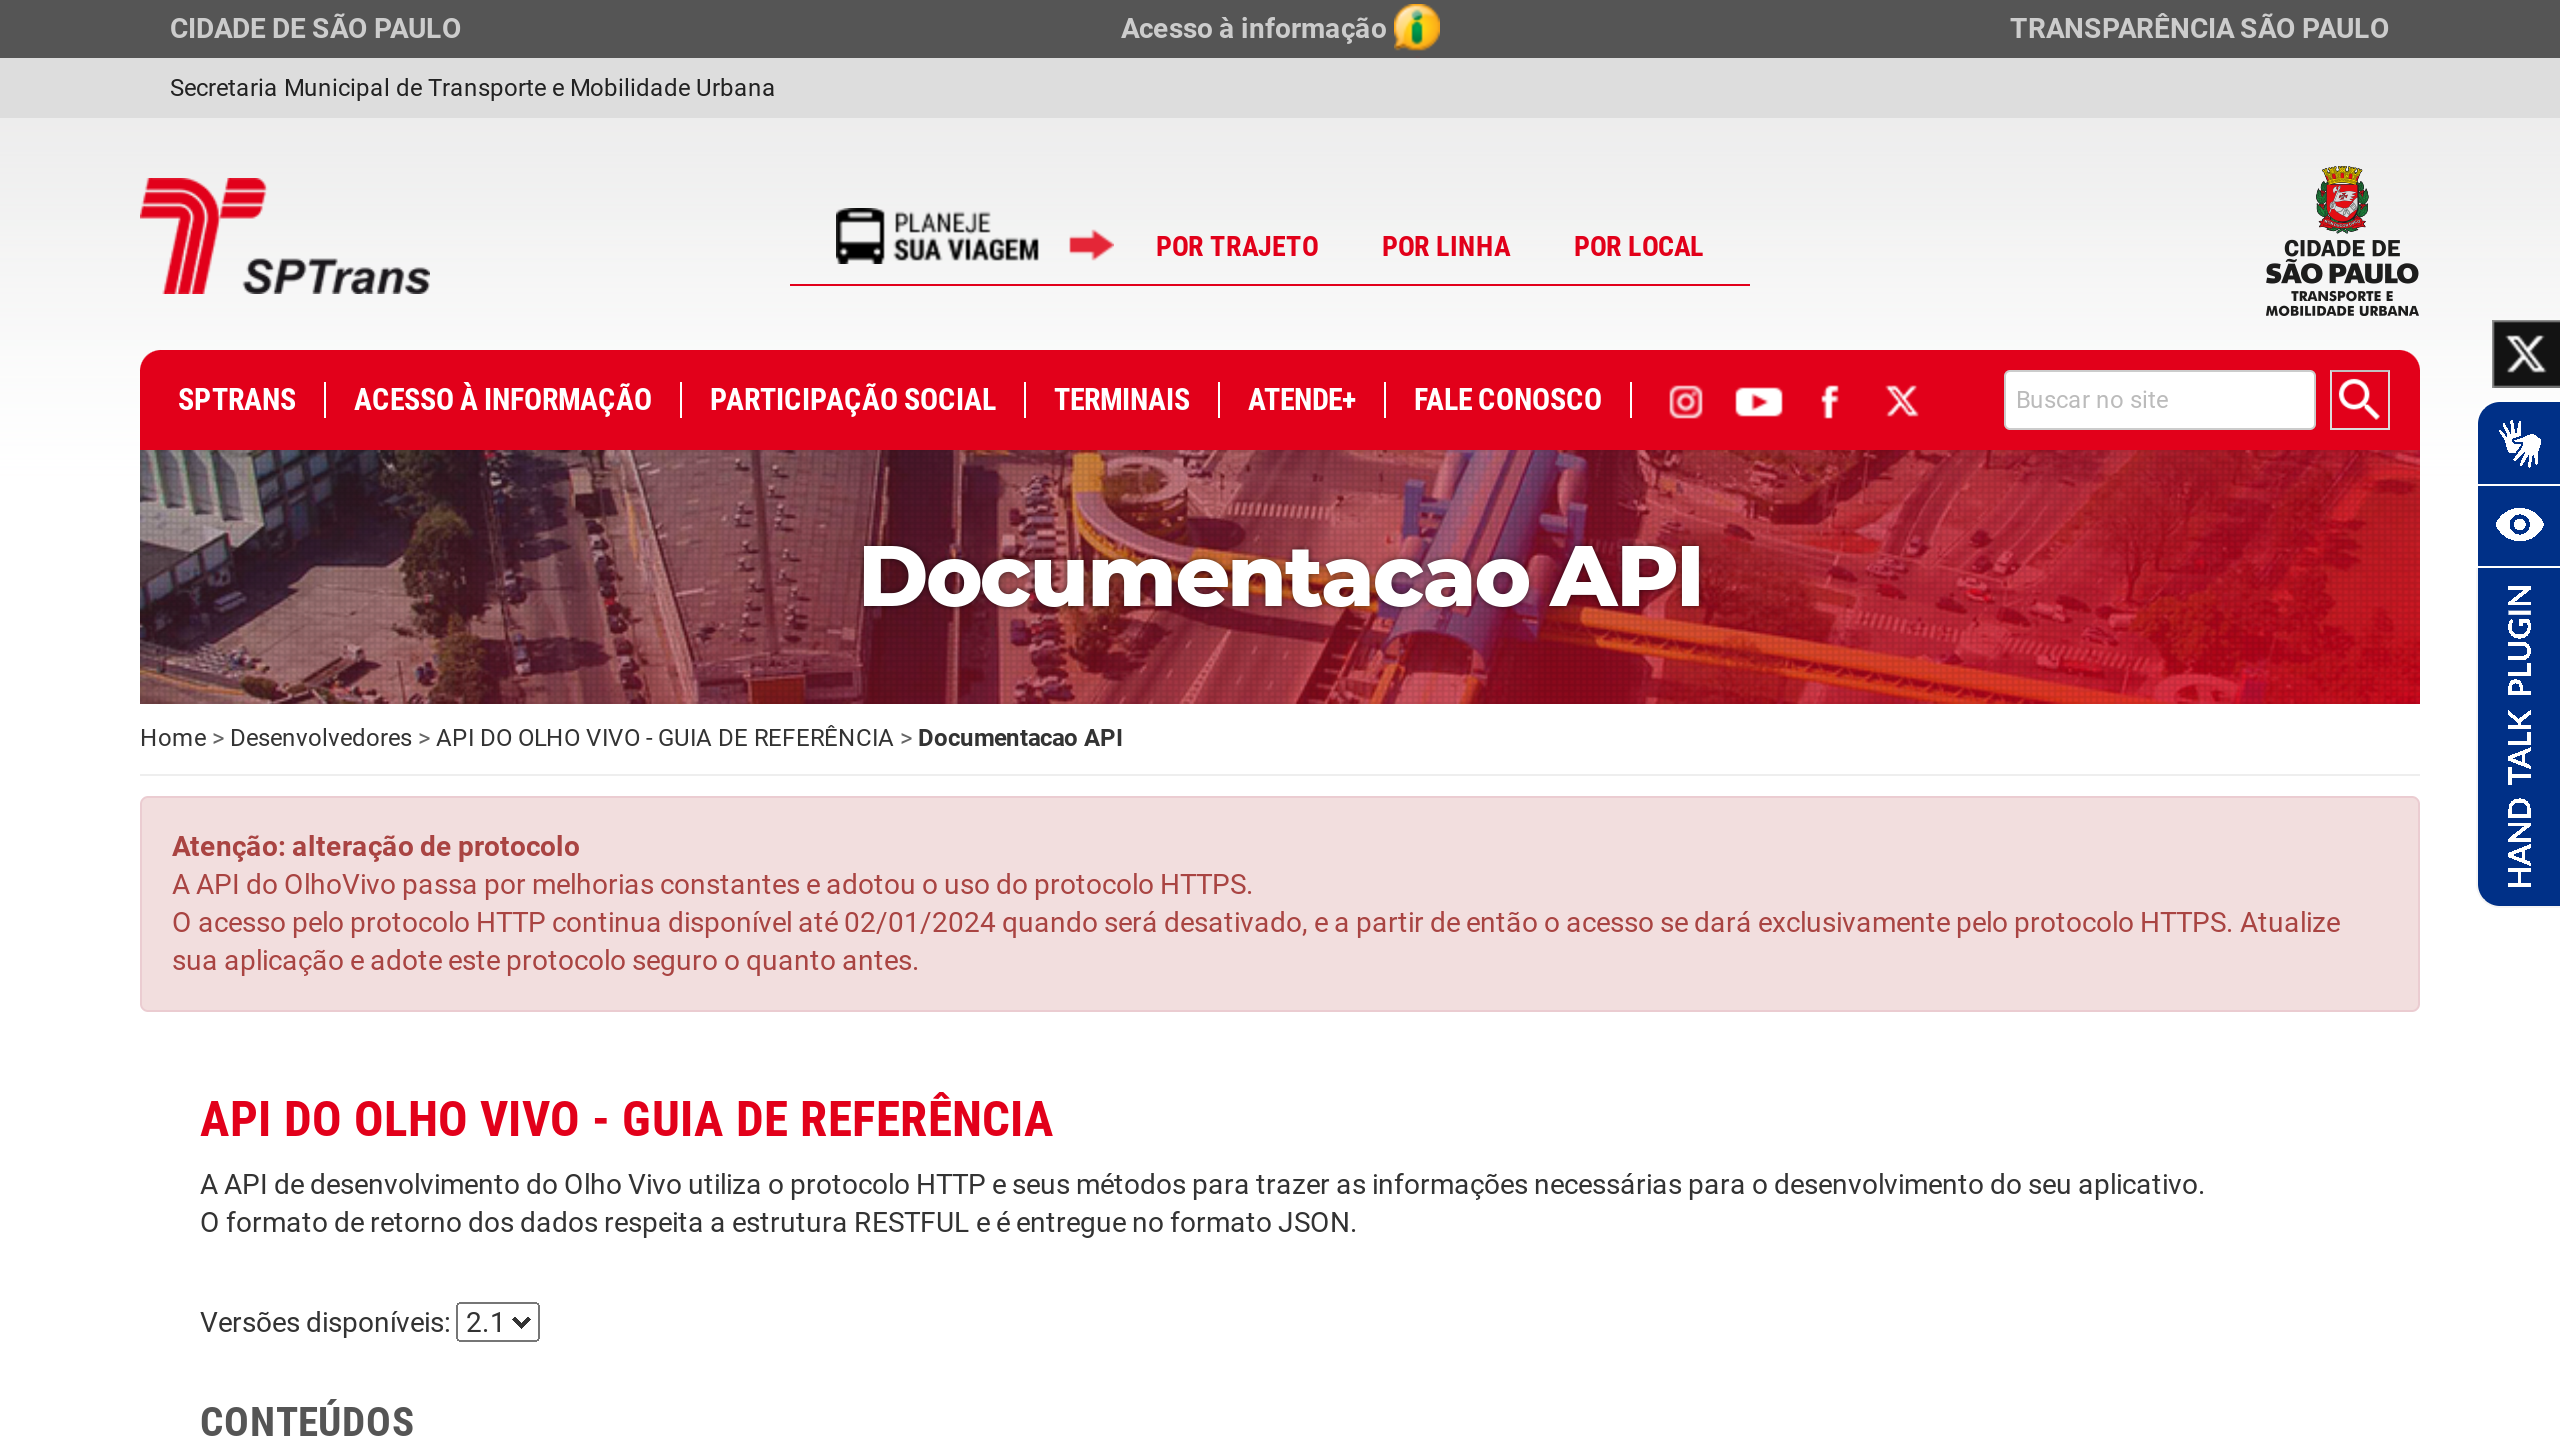 Transport for Sao Paulo, Brazil's website screenshot